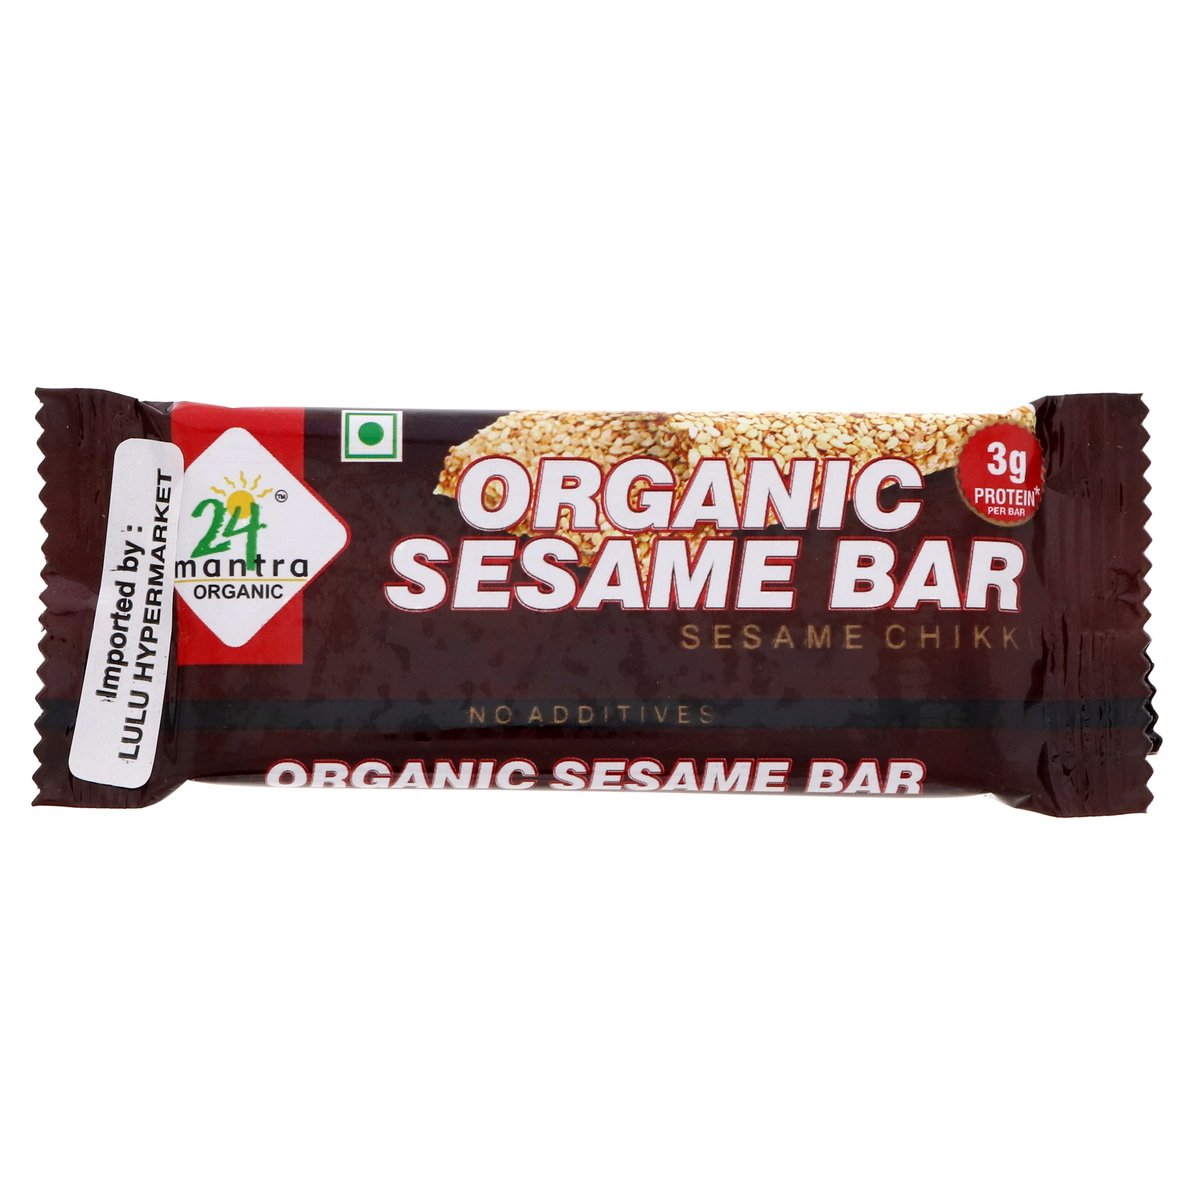 24 Mantra Organic Sesame Bar 33 g